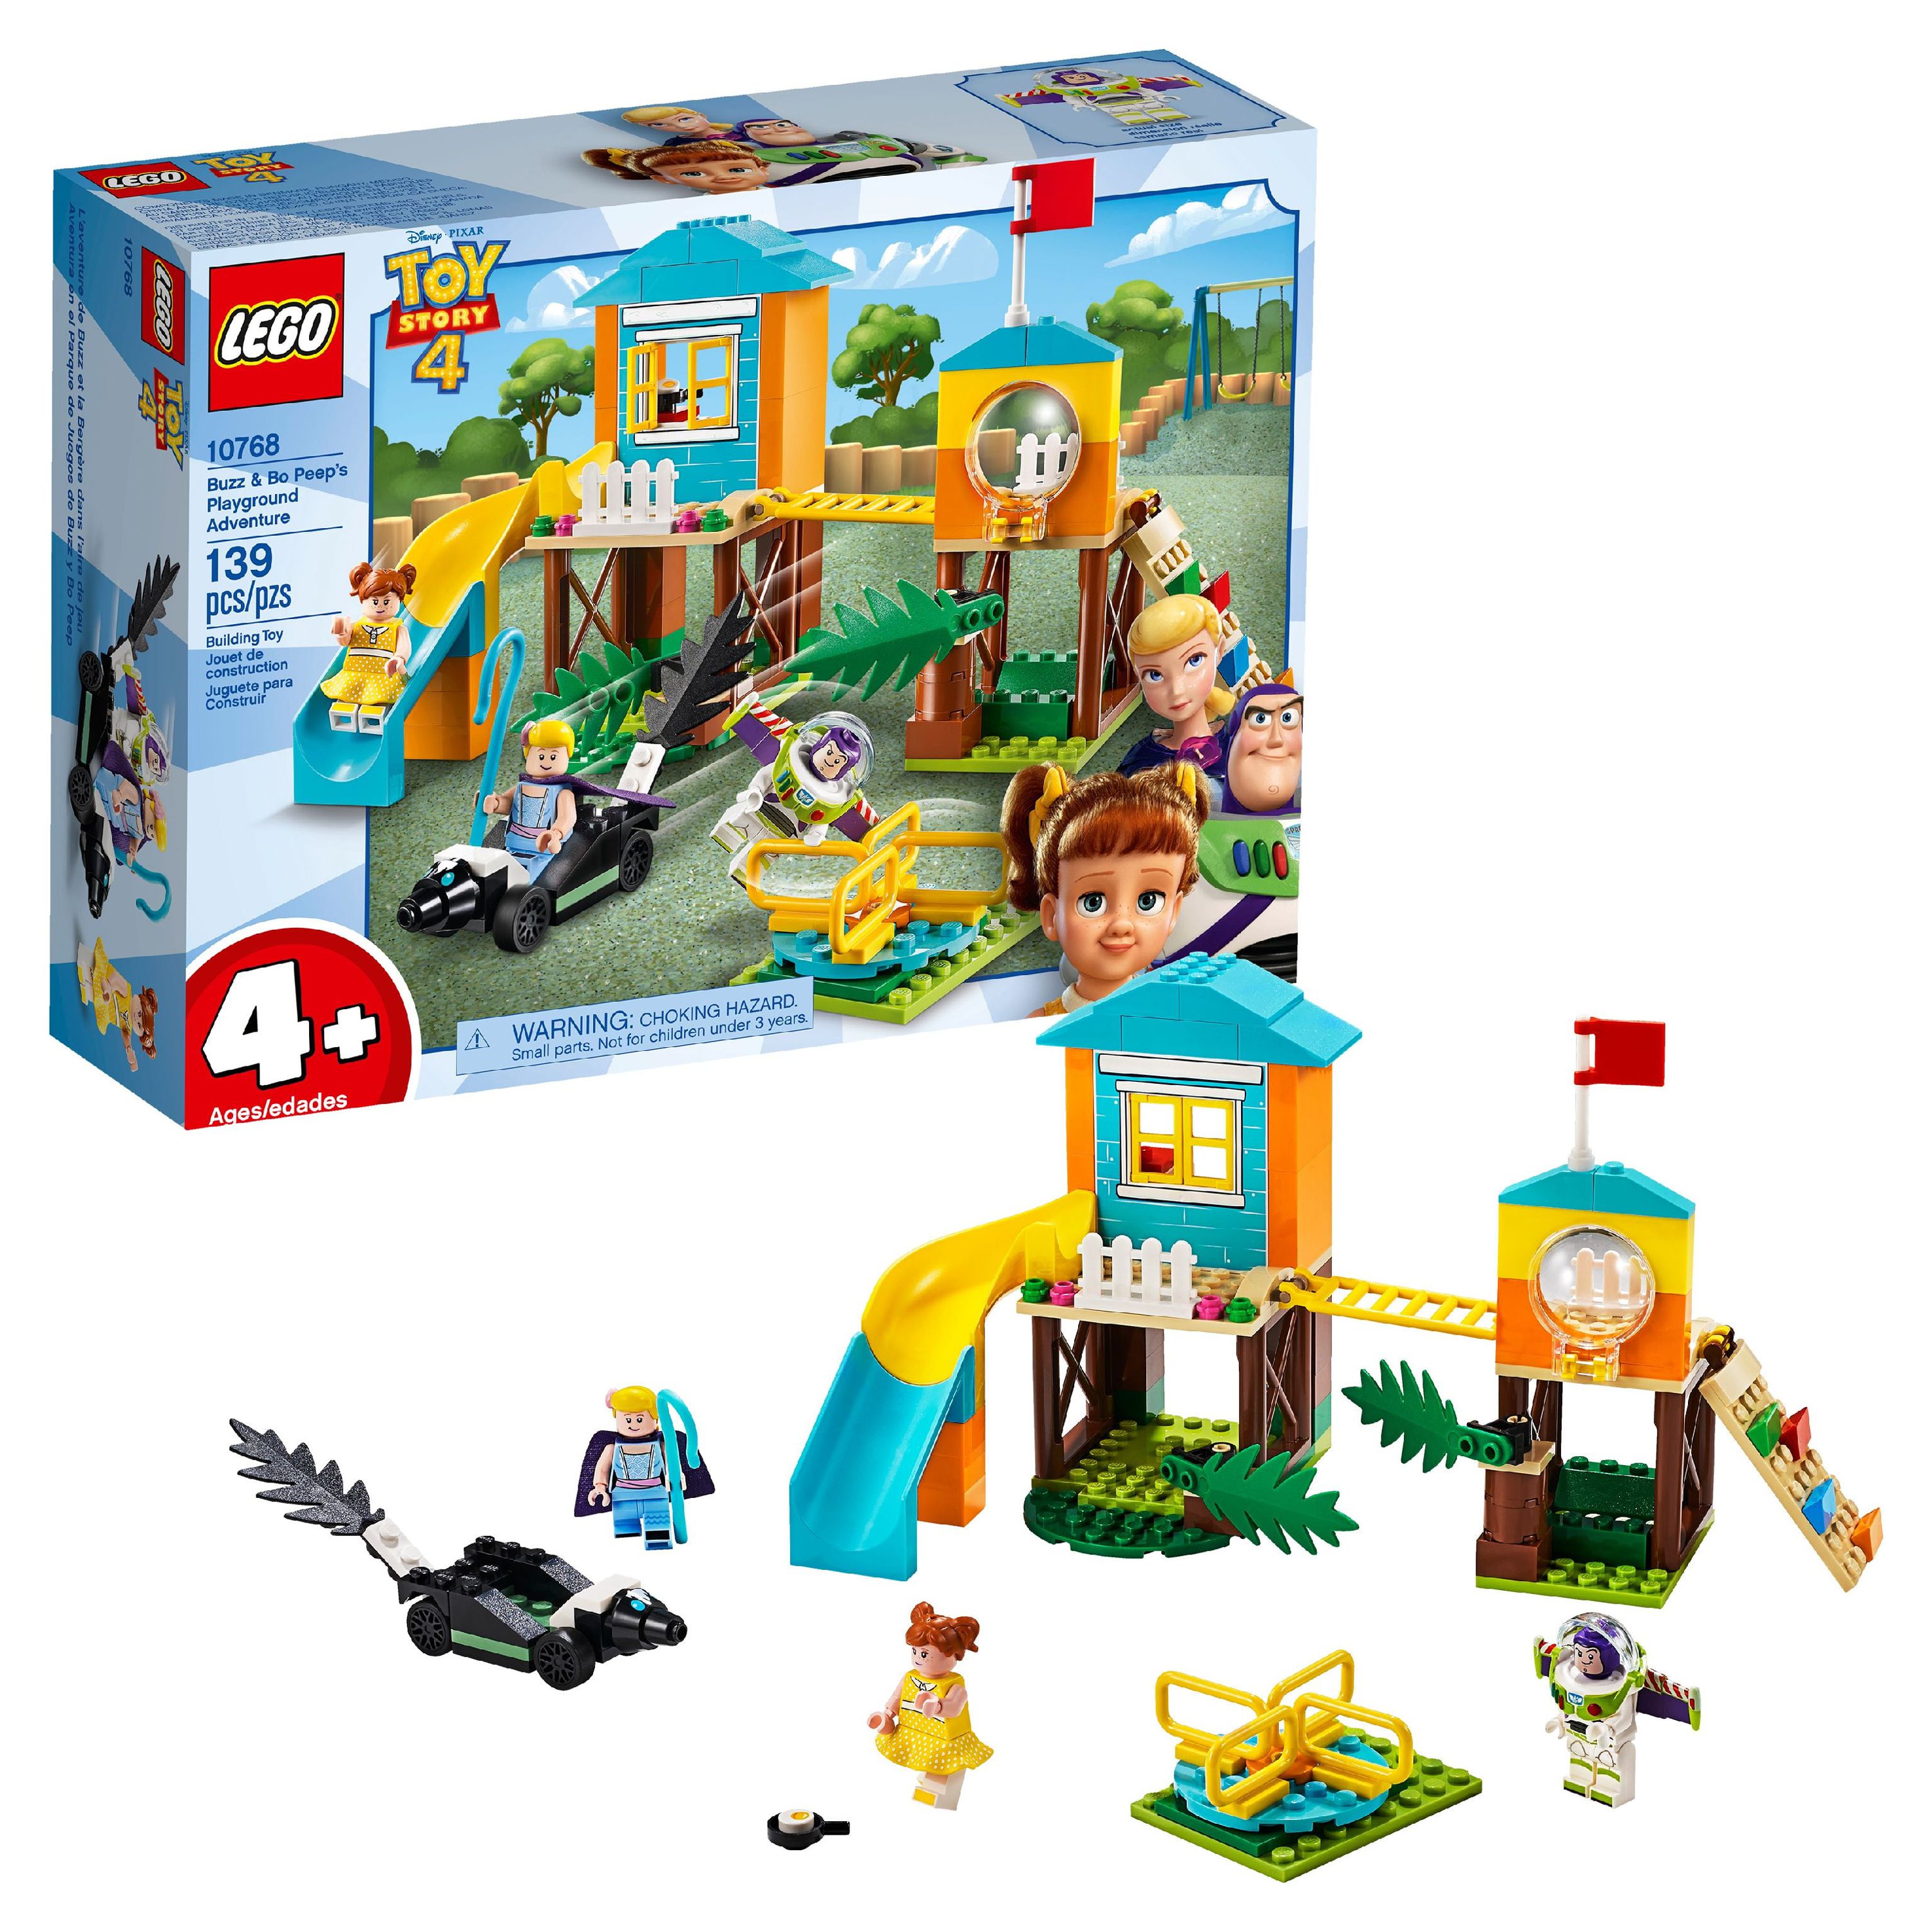 LEGO 4+ Toy Story 4 Buzz & Bo Peep's Playground Adventure Building Set 10768 - image 1 of 7